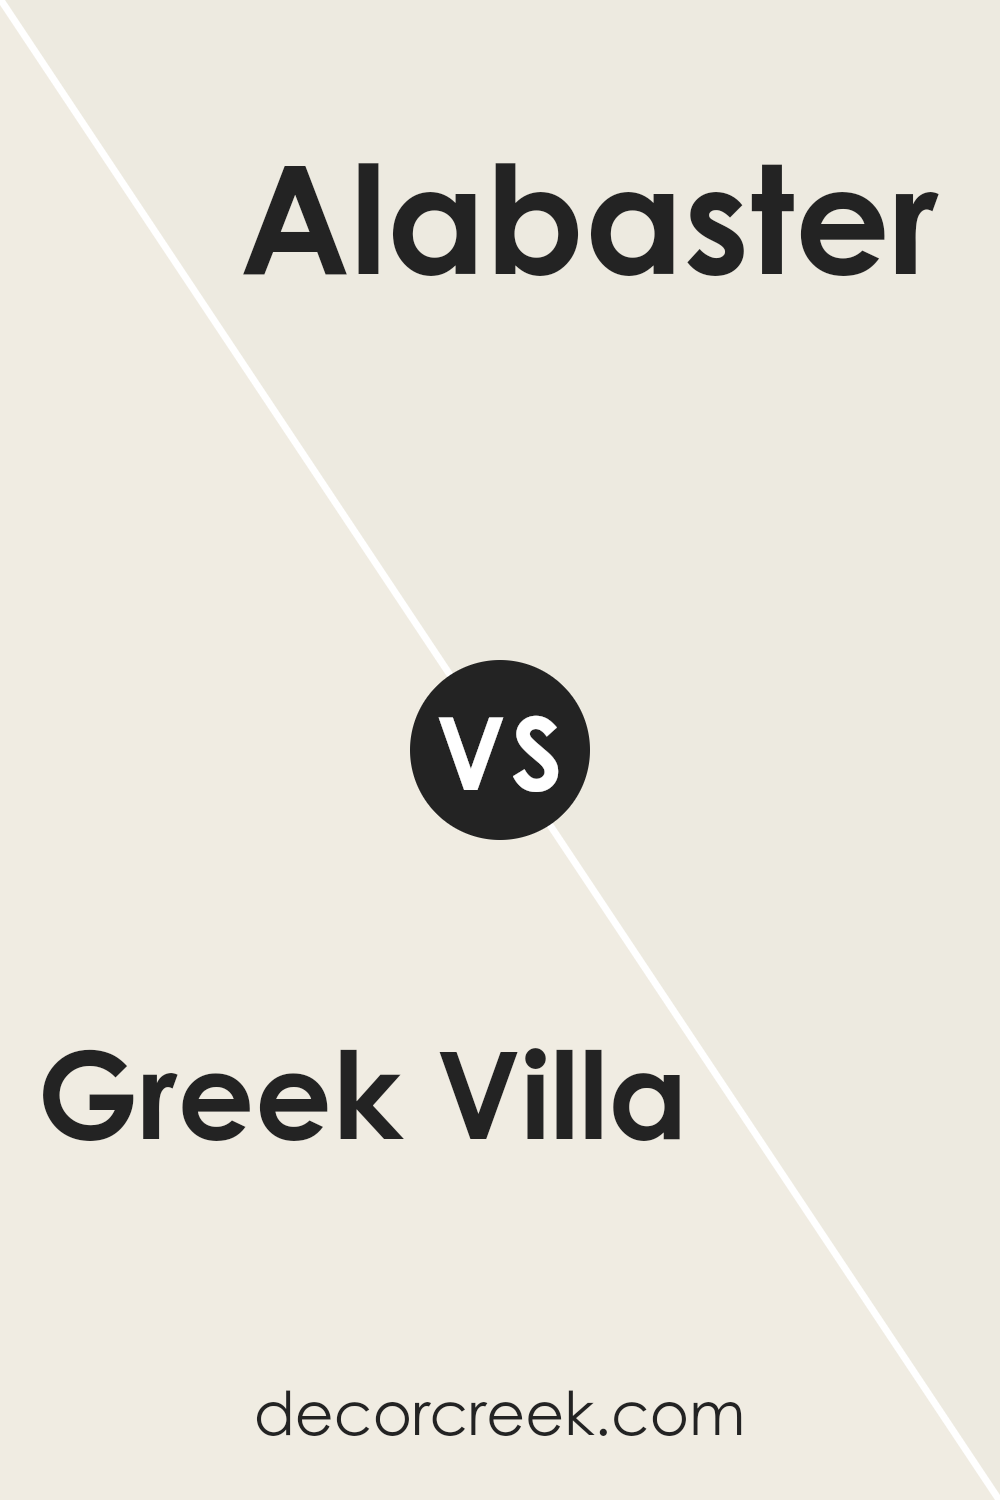 greek_villa_sw_7551_vs_alabaster_sw_7008